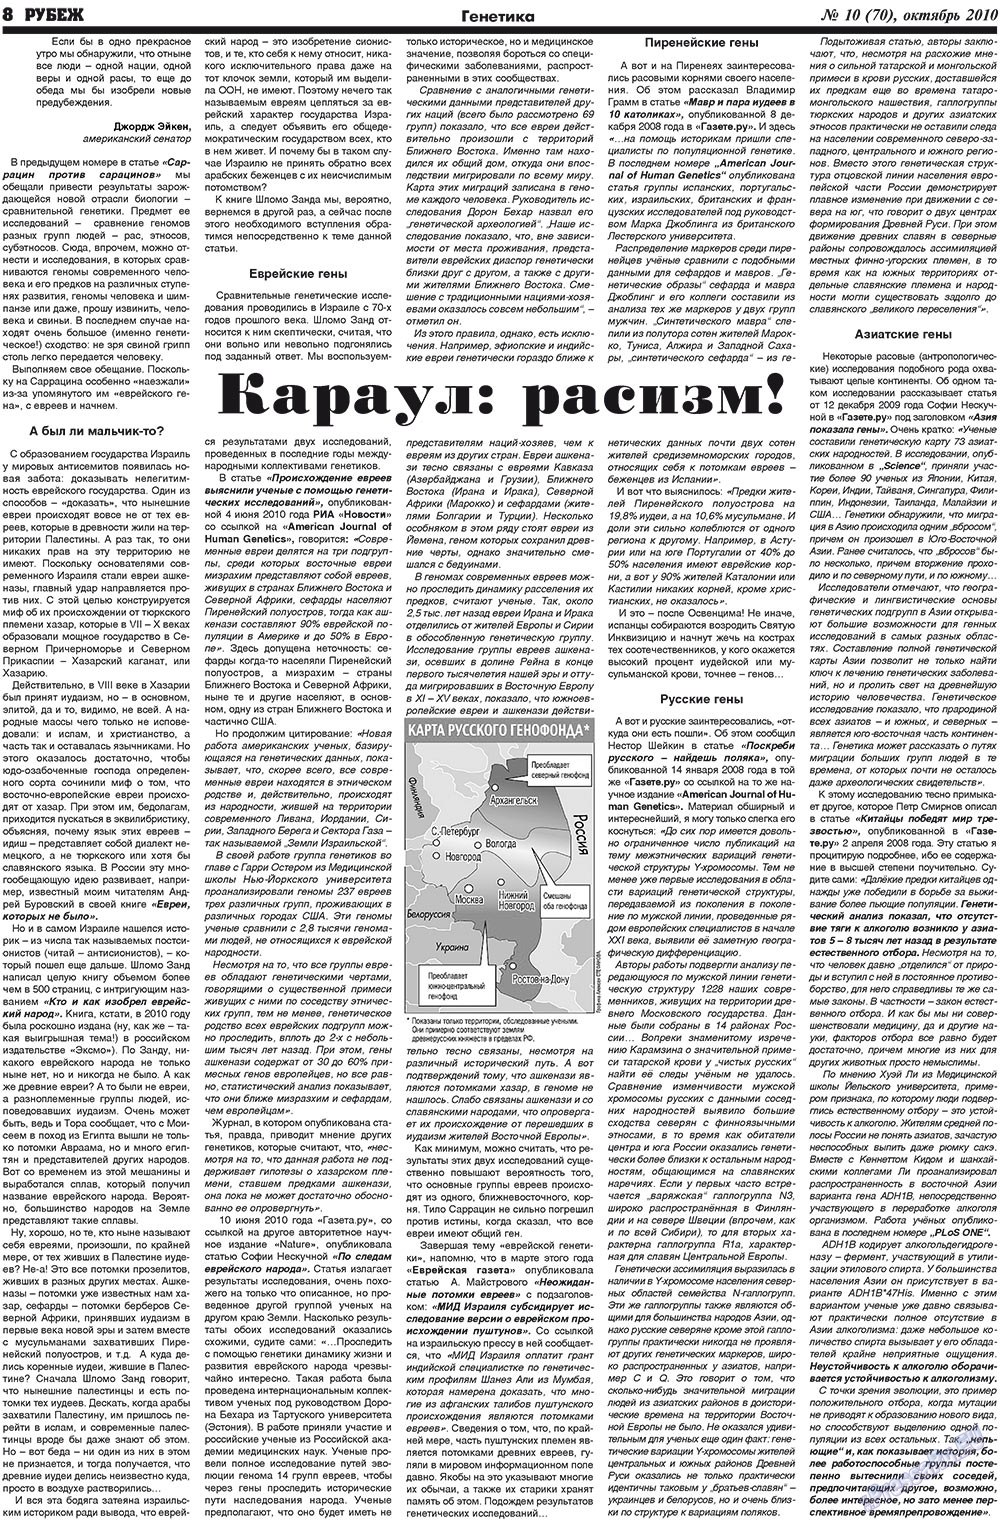 Рубеж, газета. 2010 №10 стр.8